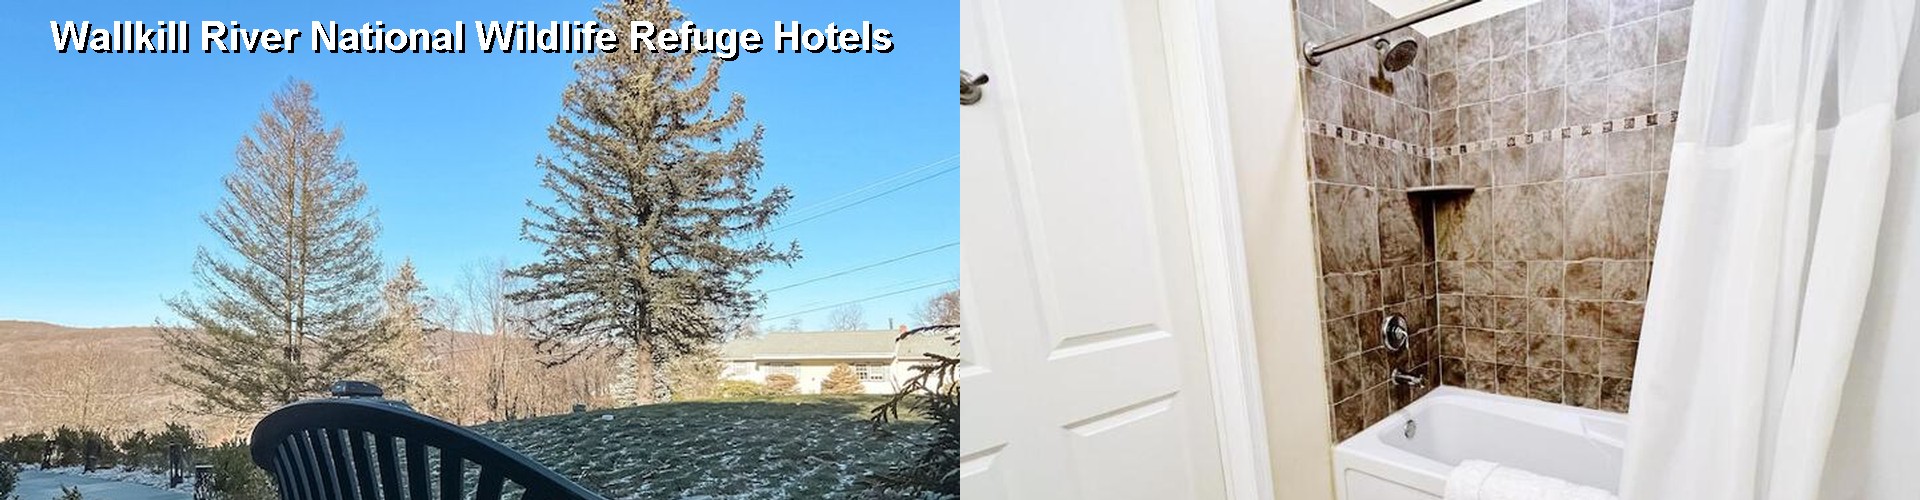 5 Best Hotels near Wallkill River National Wildlife Refuge